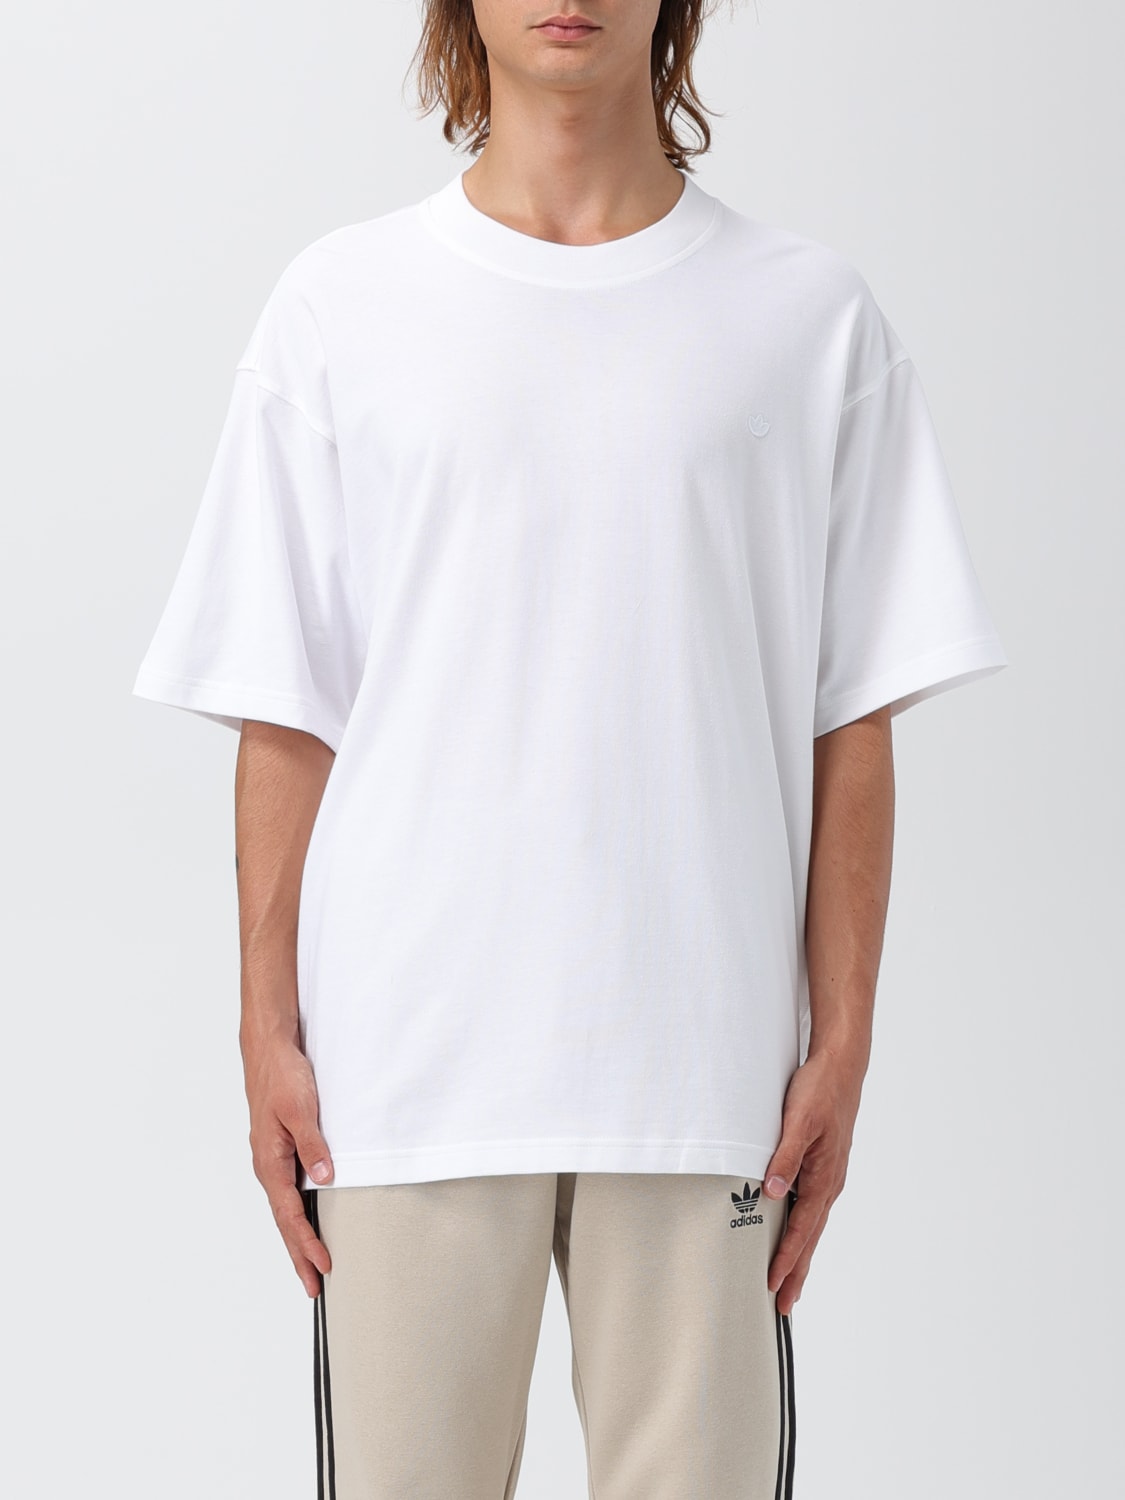 ADIDAS ORIGINALS: cotton t-shirt | with Originals White online Adidas logo shirt at t- IM4388 